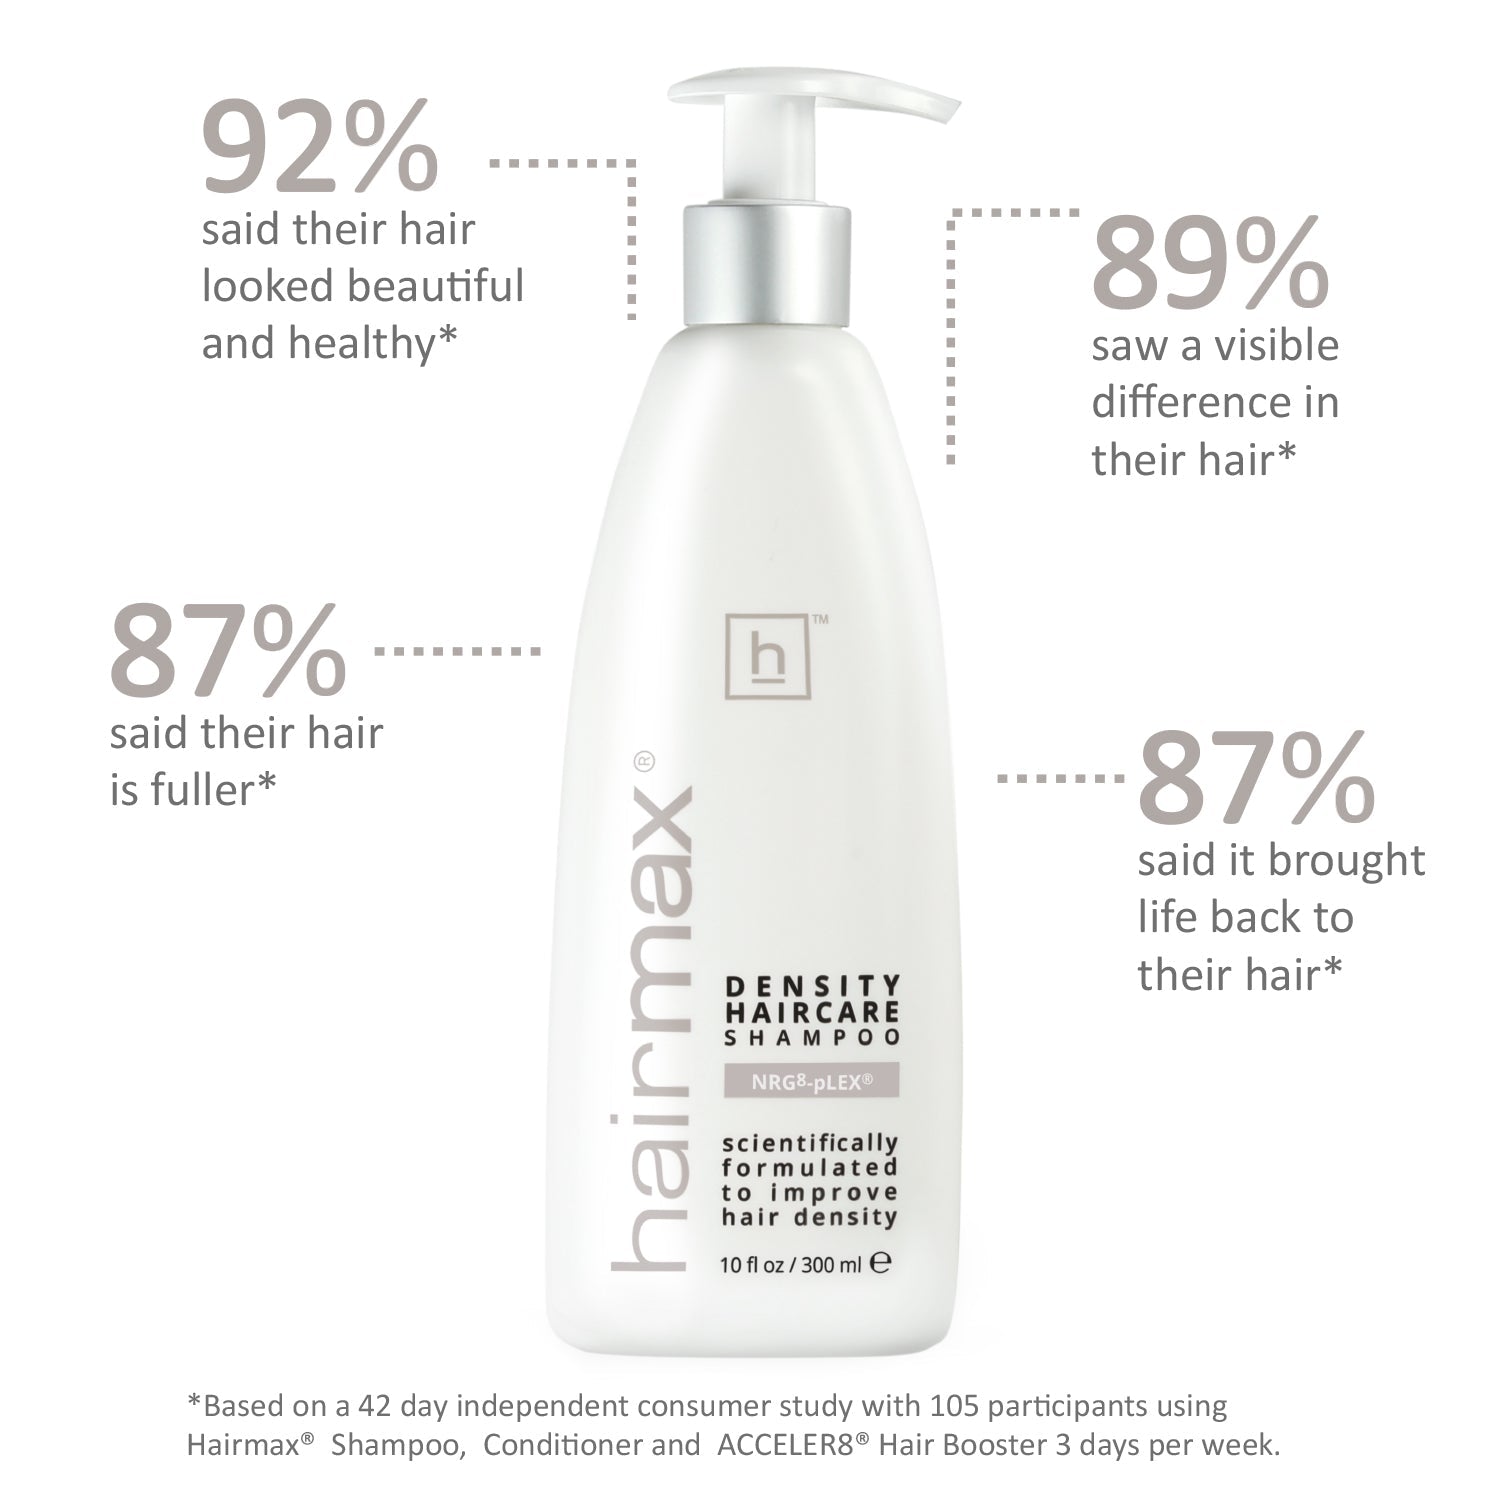 TEST 2 - Density Haircare Shampoo